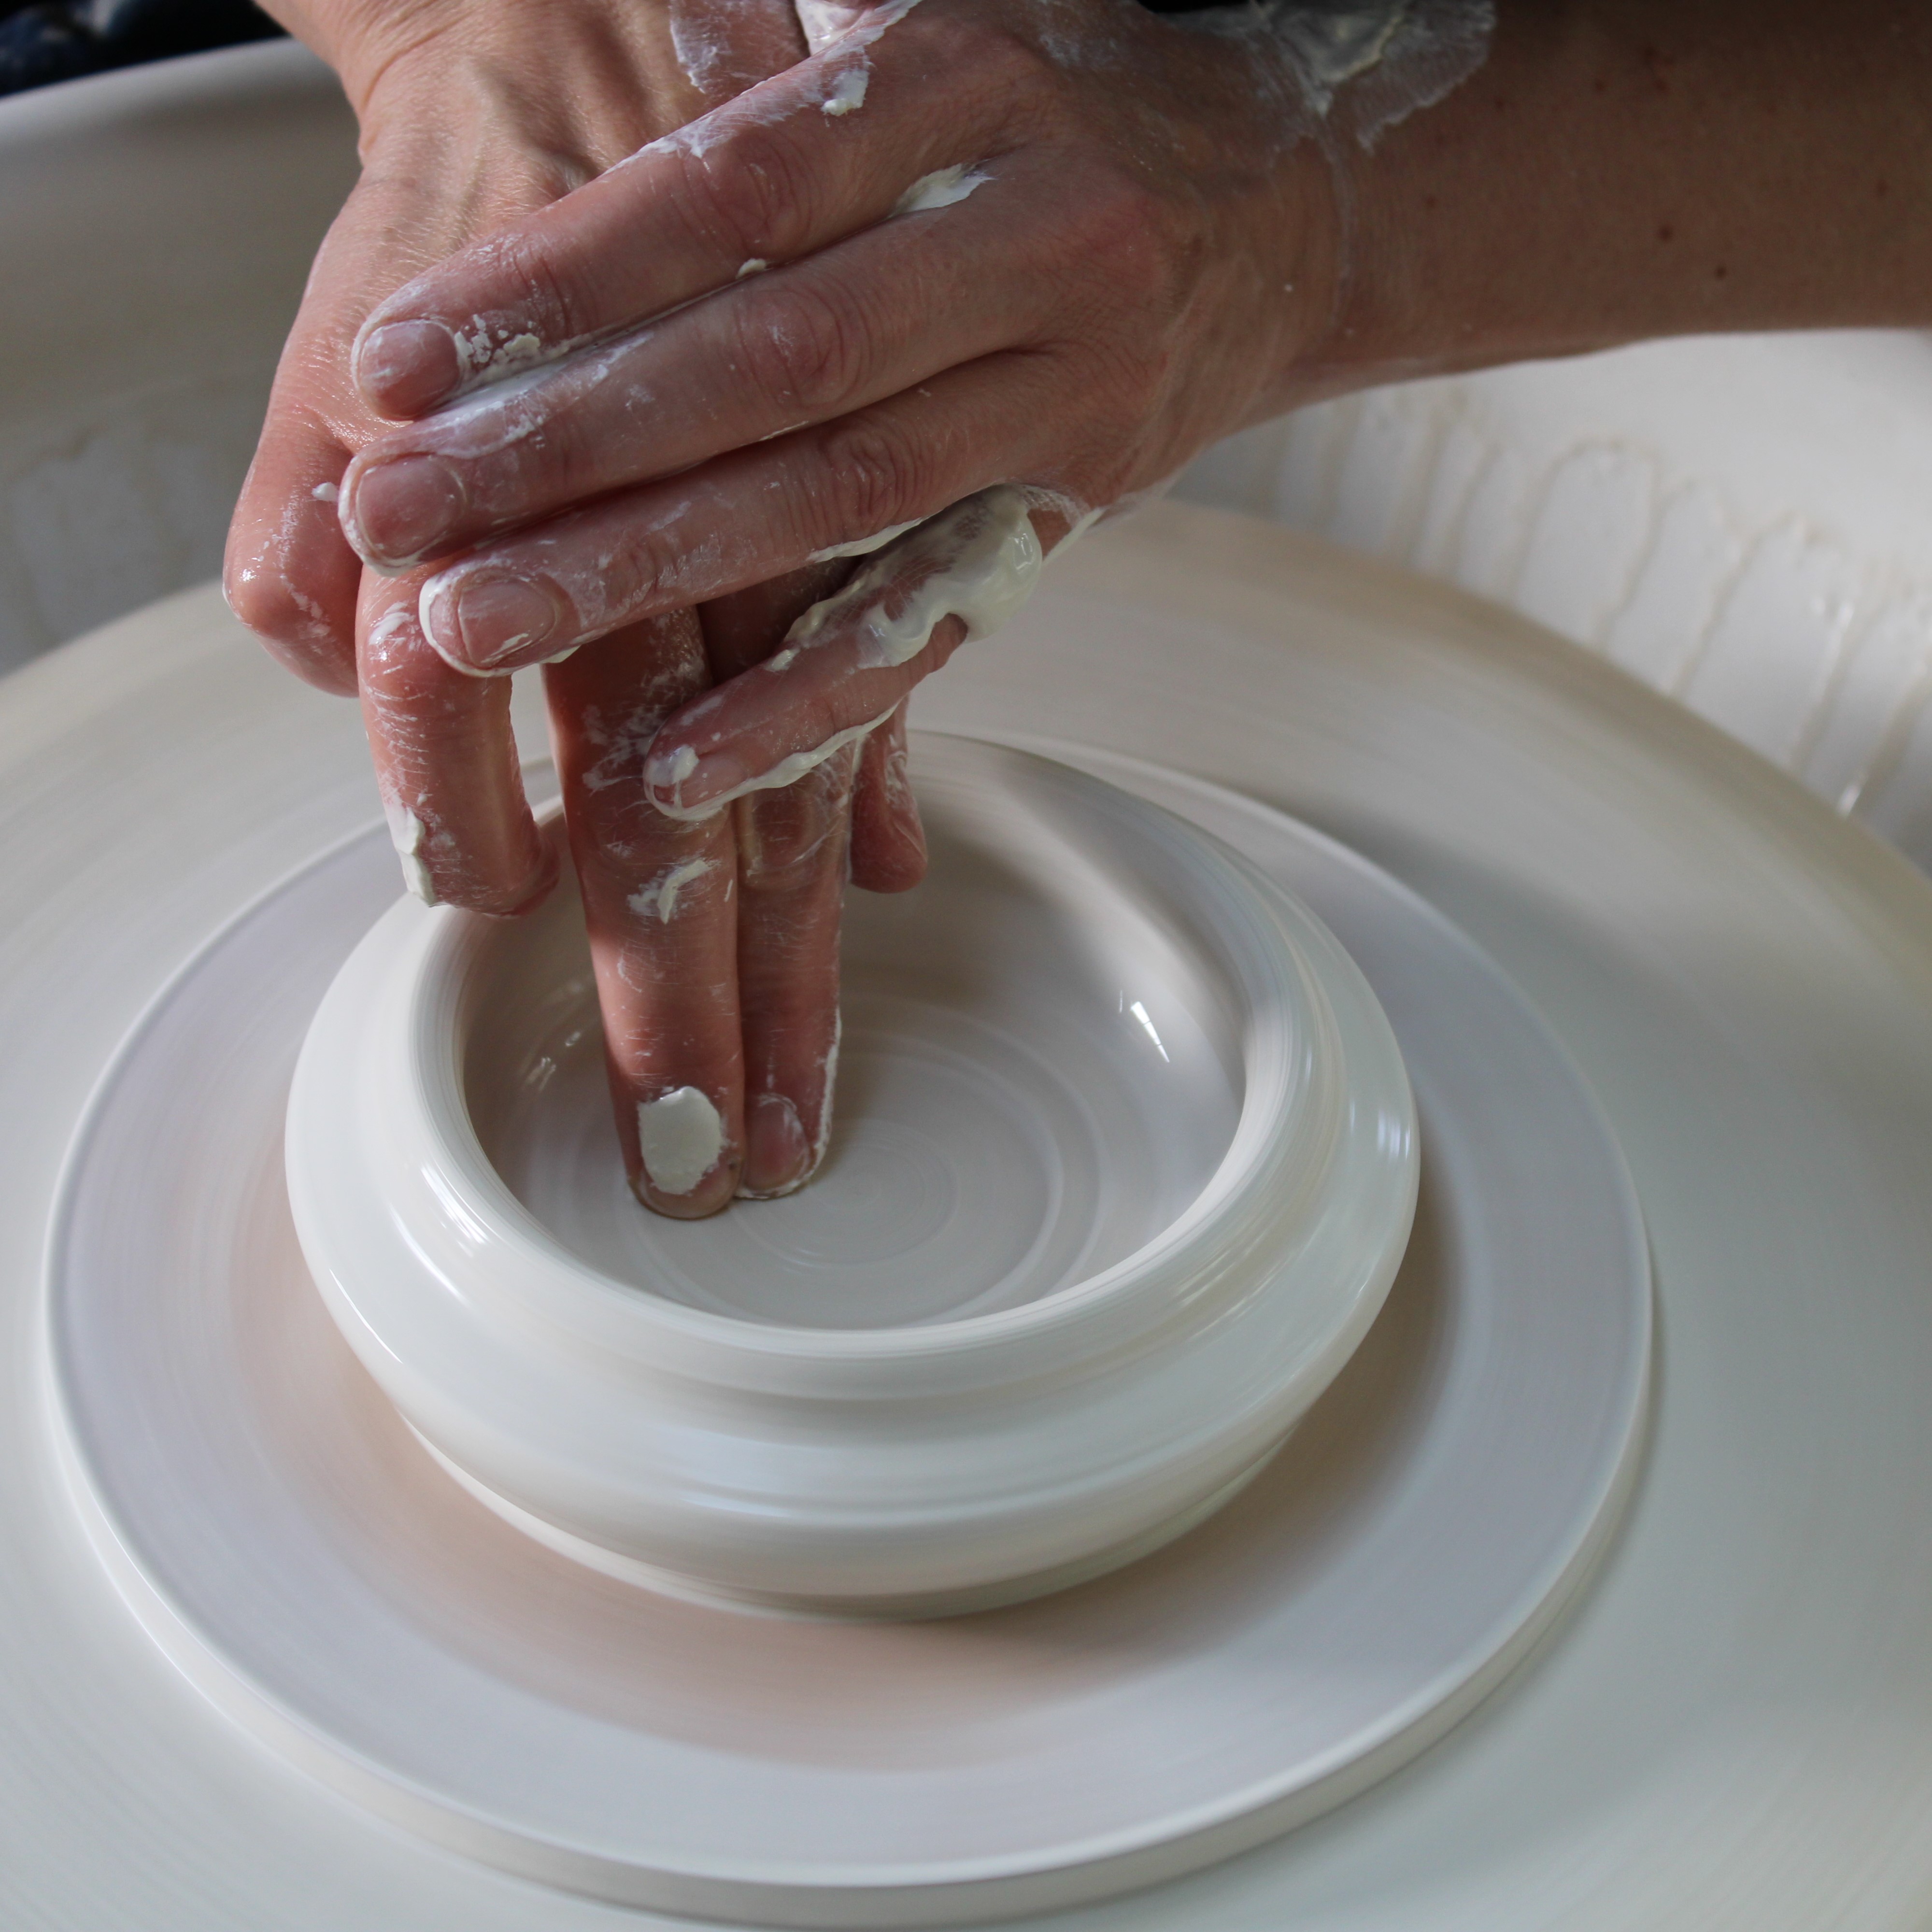 Throwing porcelain – Mini taster